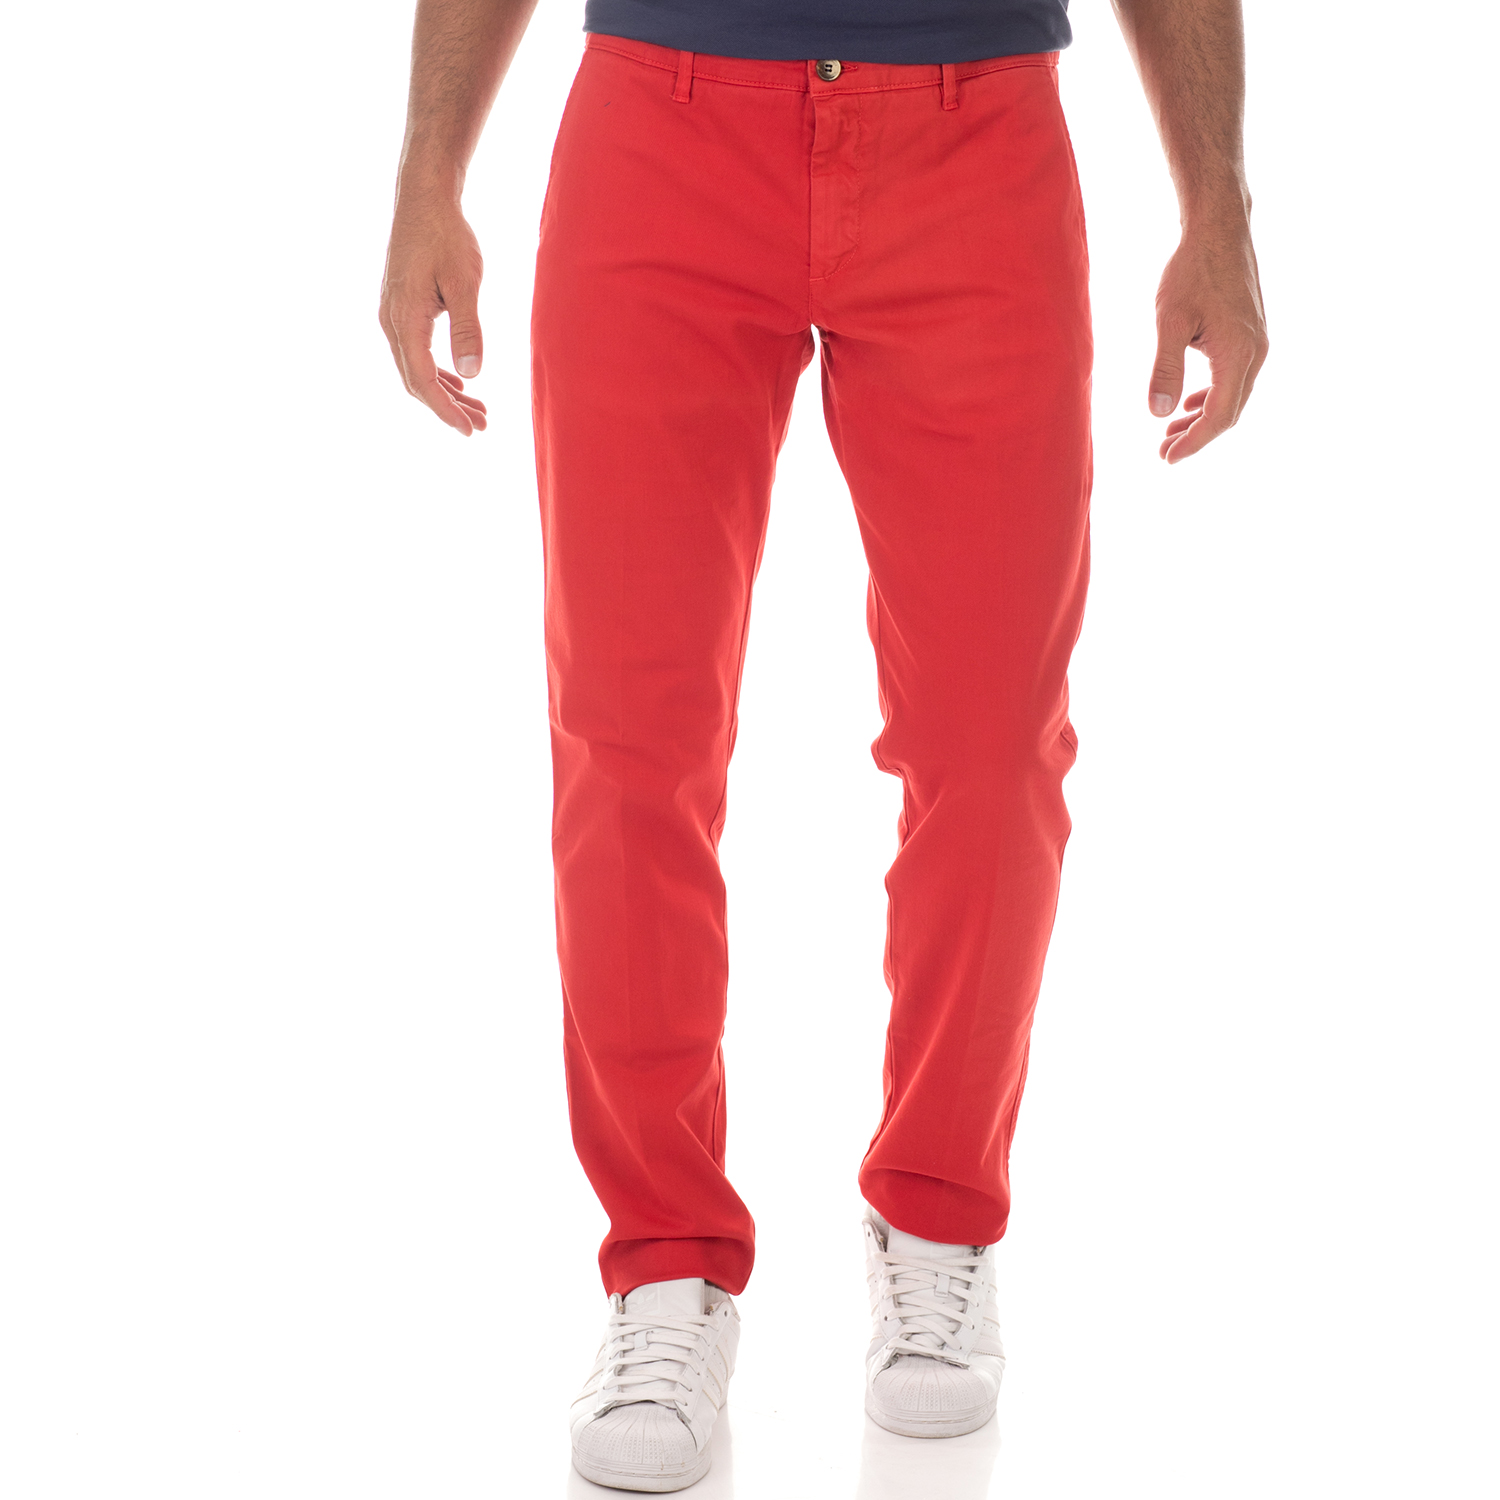 BROOKSFIELD - Ανδρικό chino παντελόνι BROOKSFIELD STANDARD FIT κόκκινο Ανδρικά/Ρούχα/Παντελόνια/Chinos